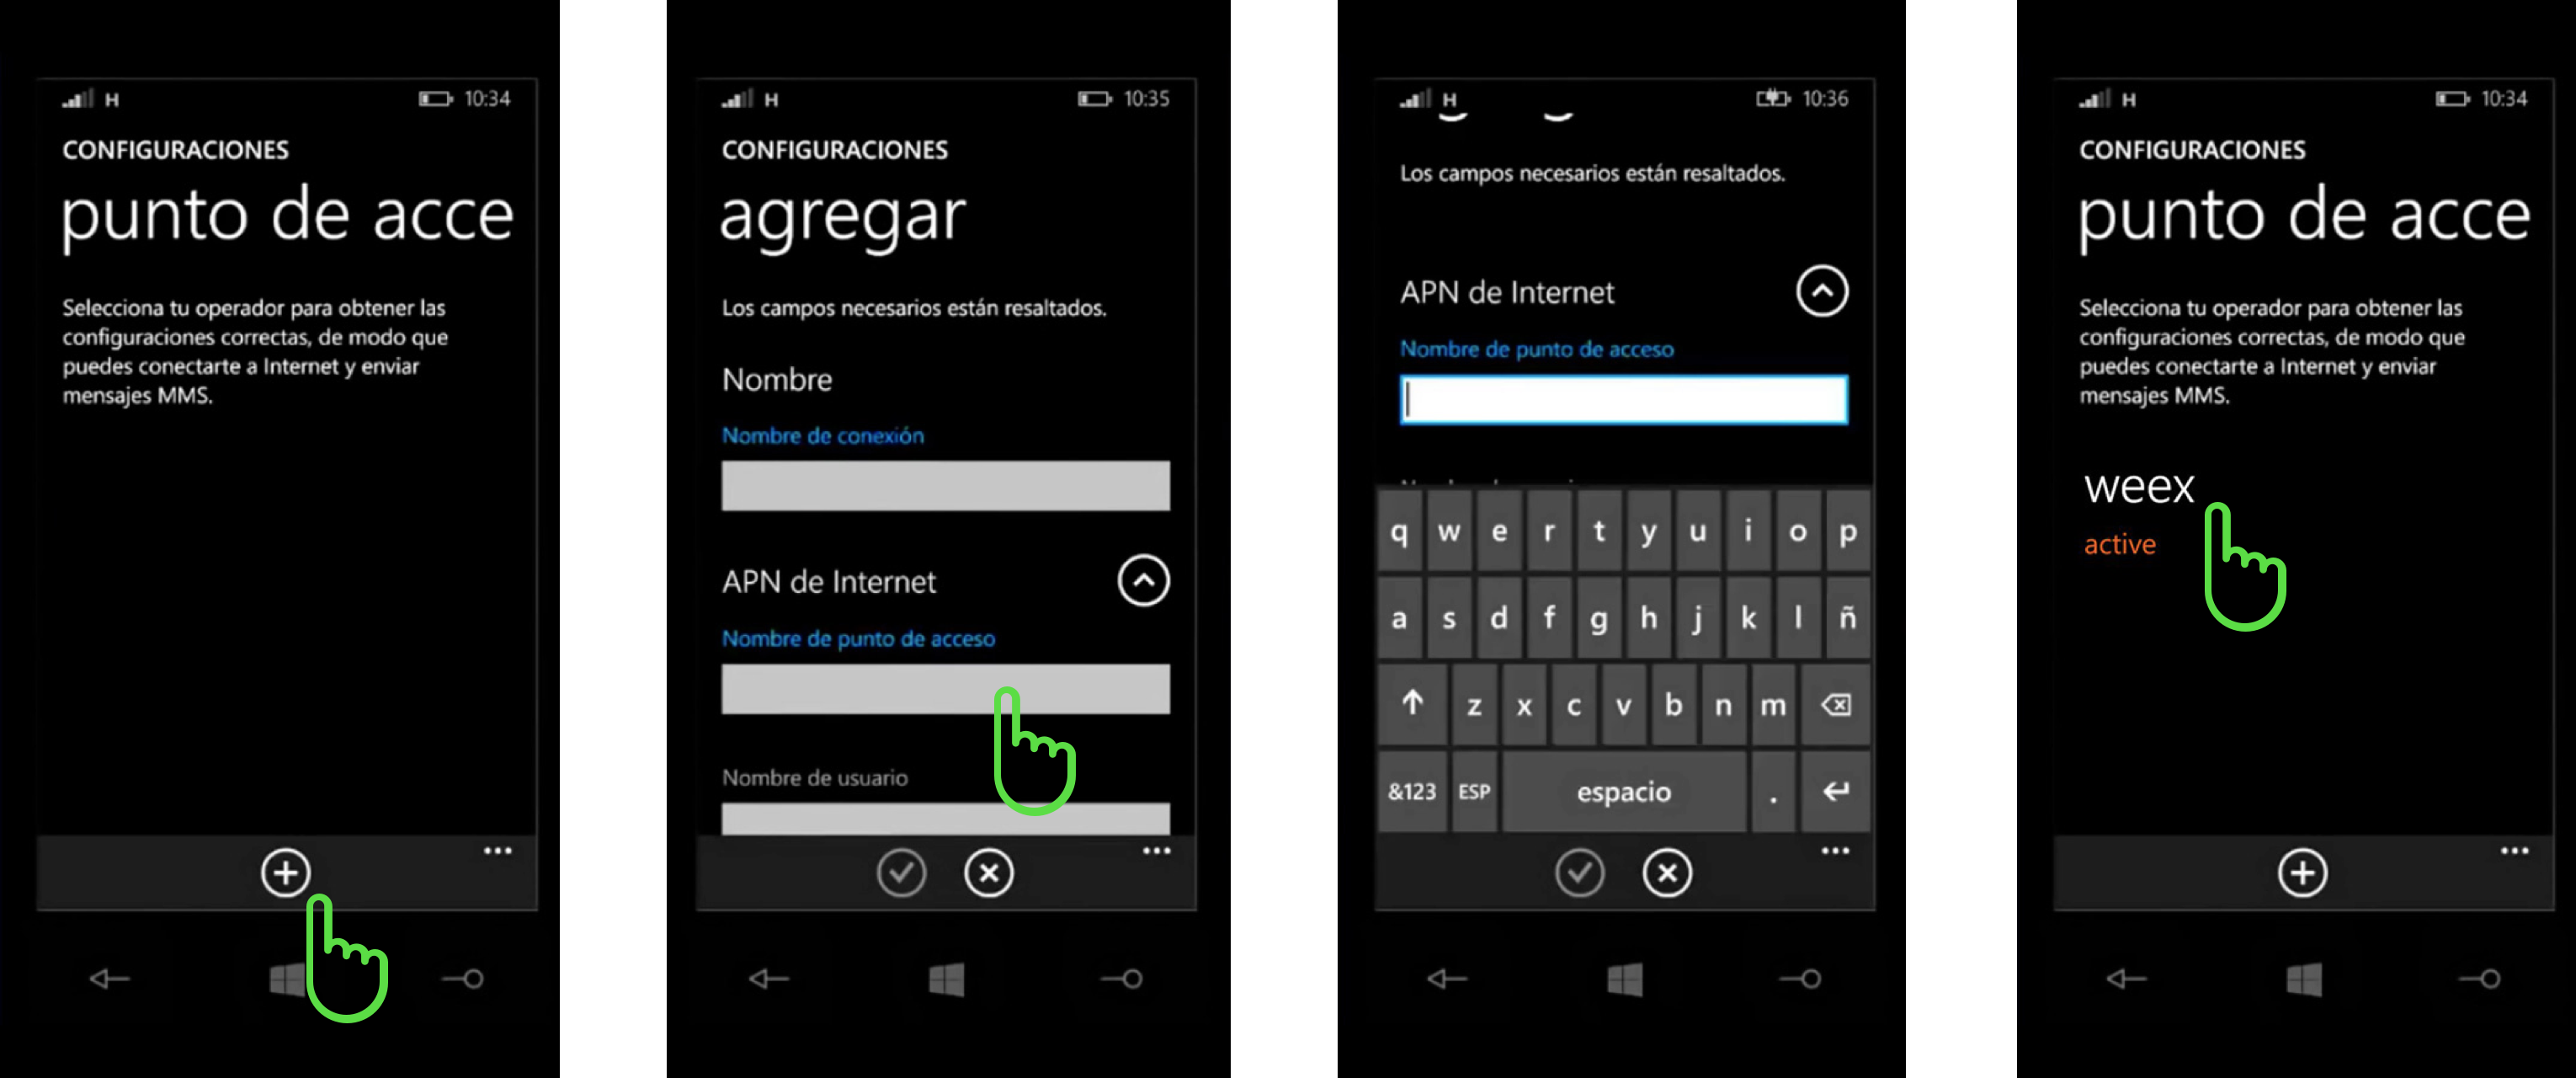 Imagen configuración punto de accesso con Windows Phone